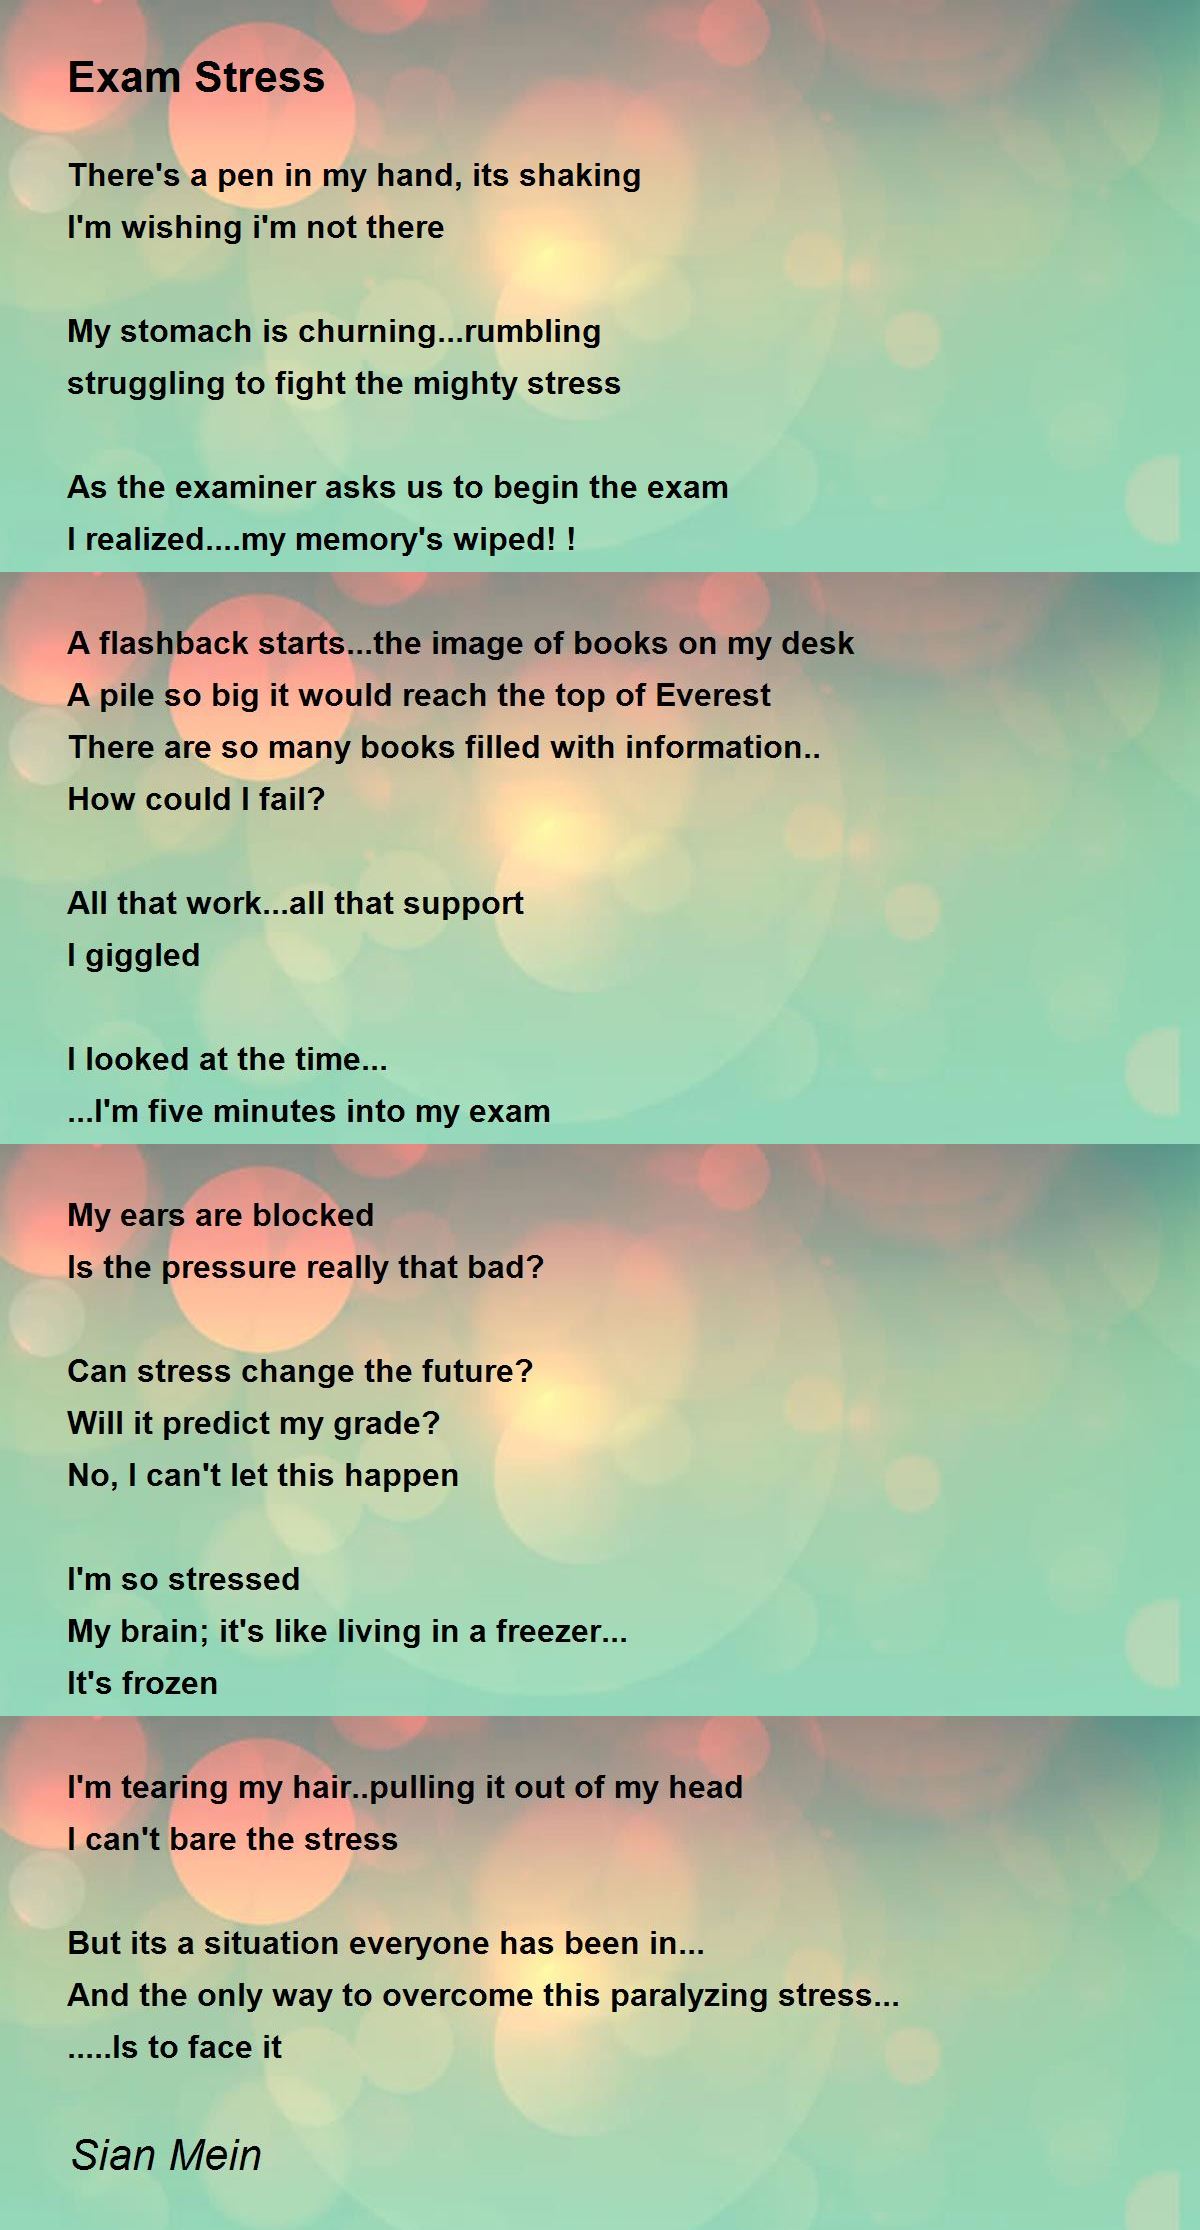 Exam Stress Poem by Sian Mein - Poem Hunter